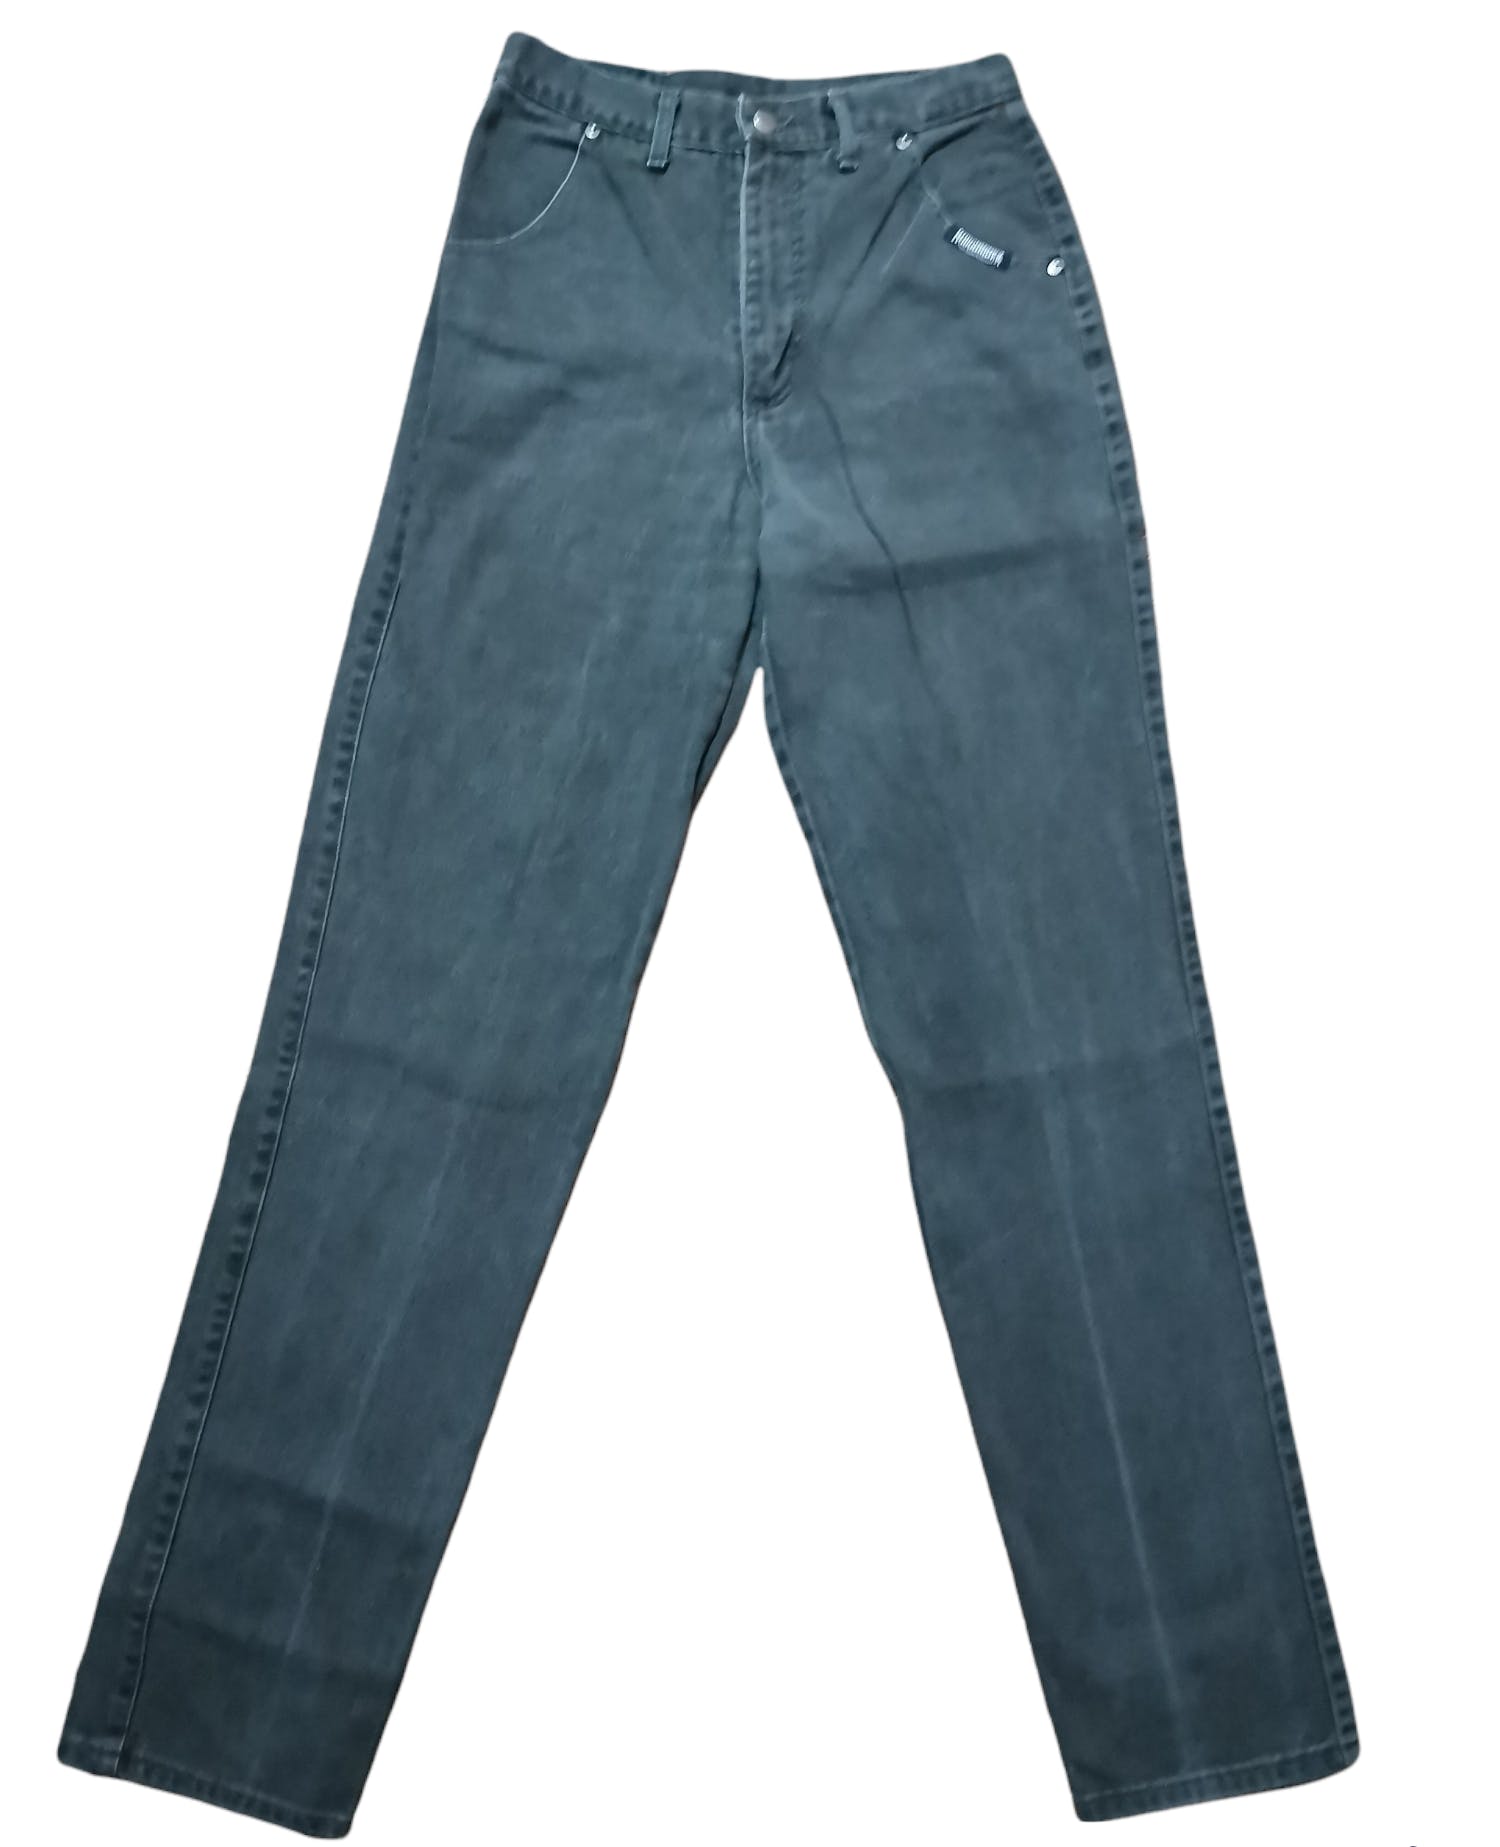 Vintage Roughrider Jeans x Talon Zipper - 1